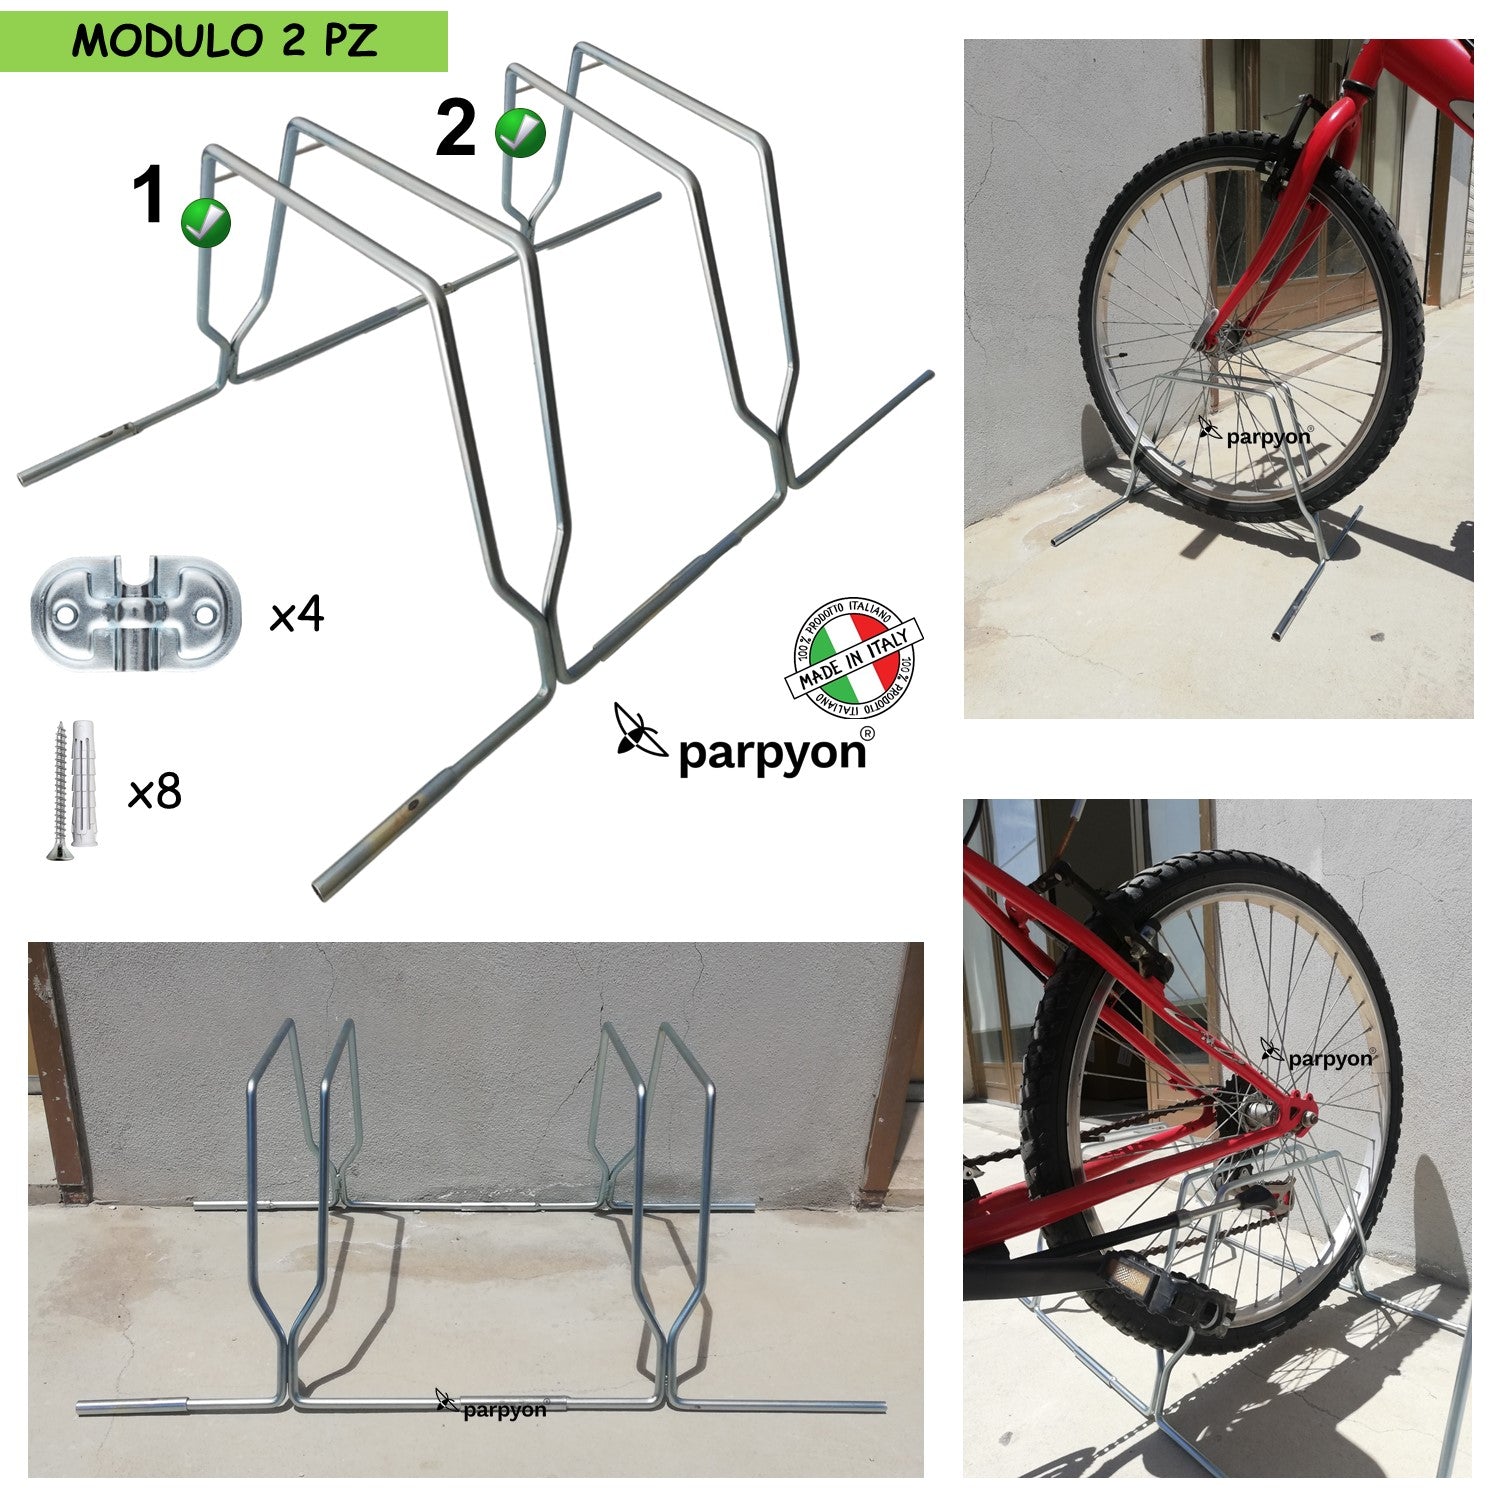 Parpyon® porta biciclette da terra n. 2 rastrelliera biciclette, porta bici